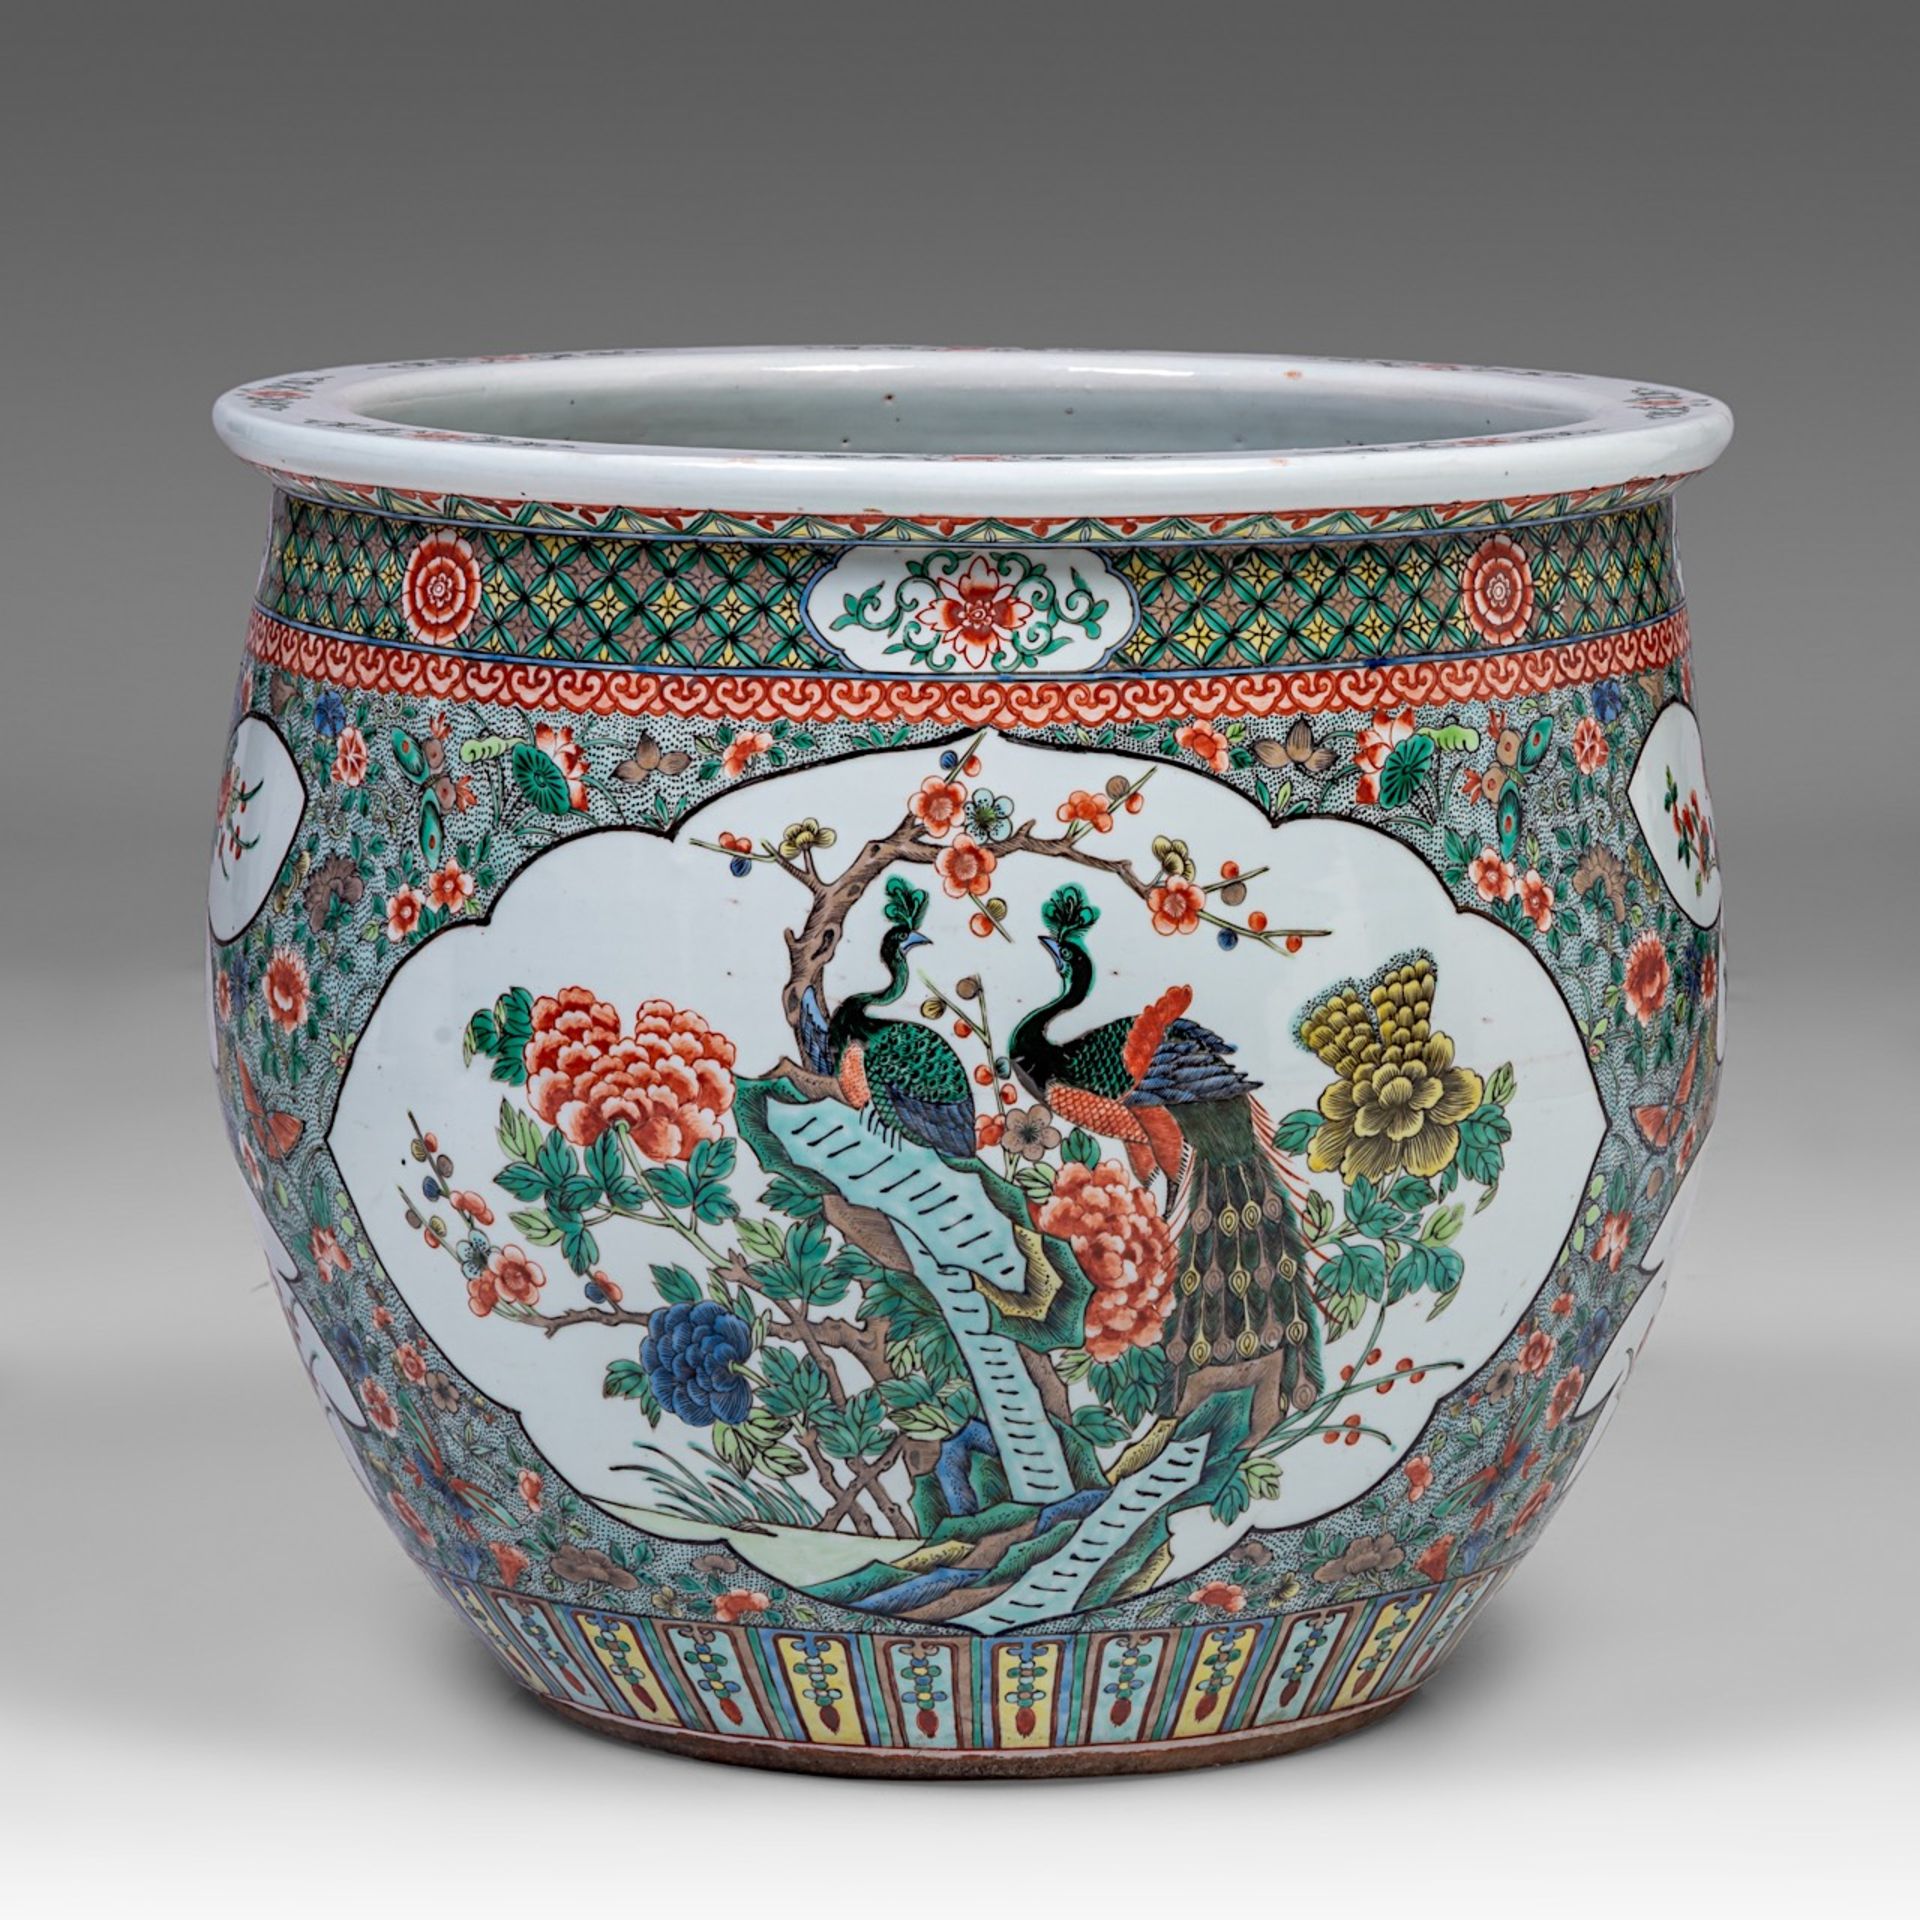 A large Chinese famille verte 'Birds in flower garden' fish bowl, late 19thC/Republic period, H 46 - - Bild 4 aus 7